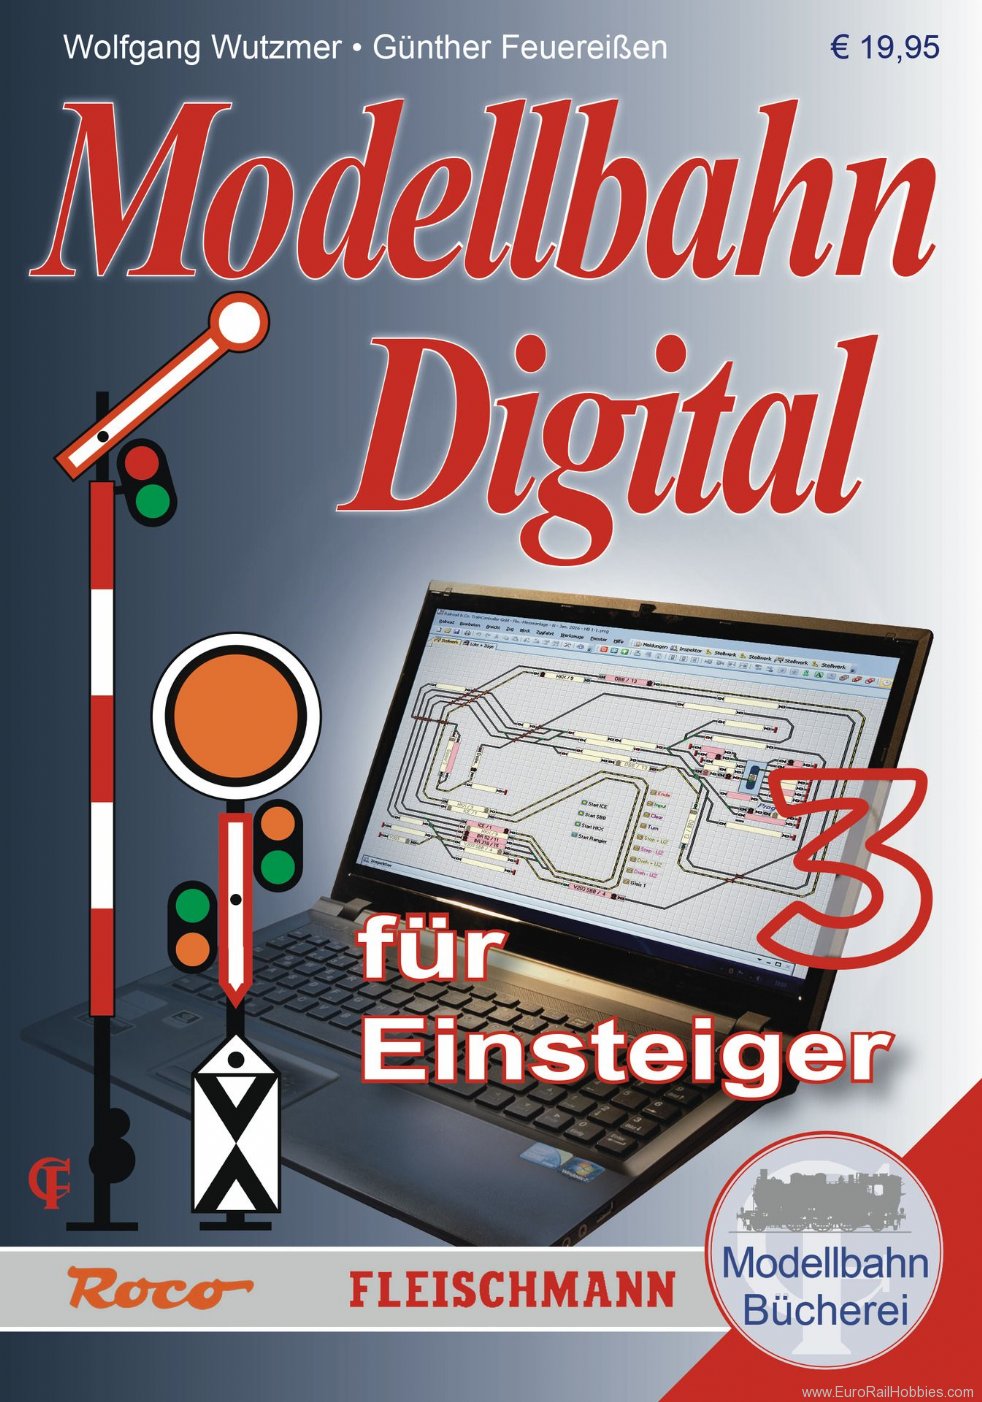 Roco 81393 Modellbahn Digital for Beginners Book (German